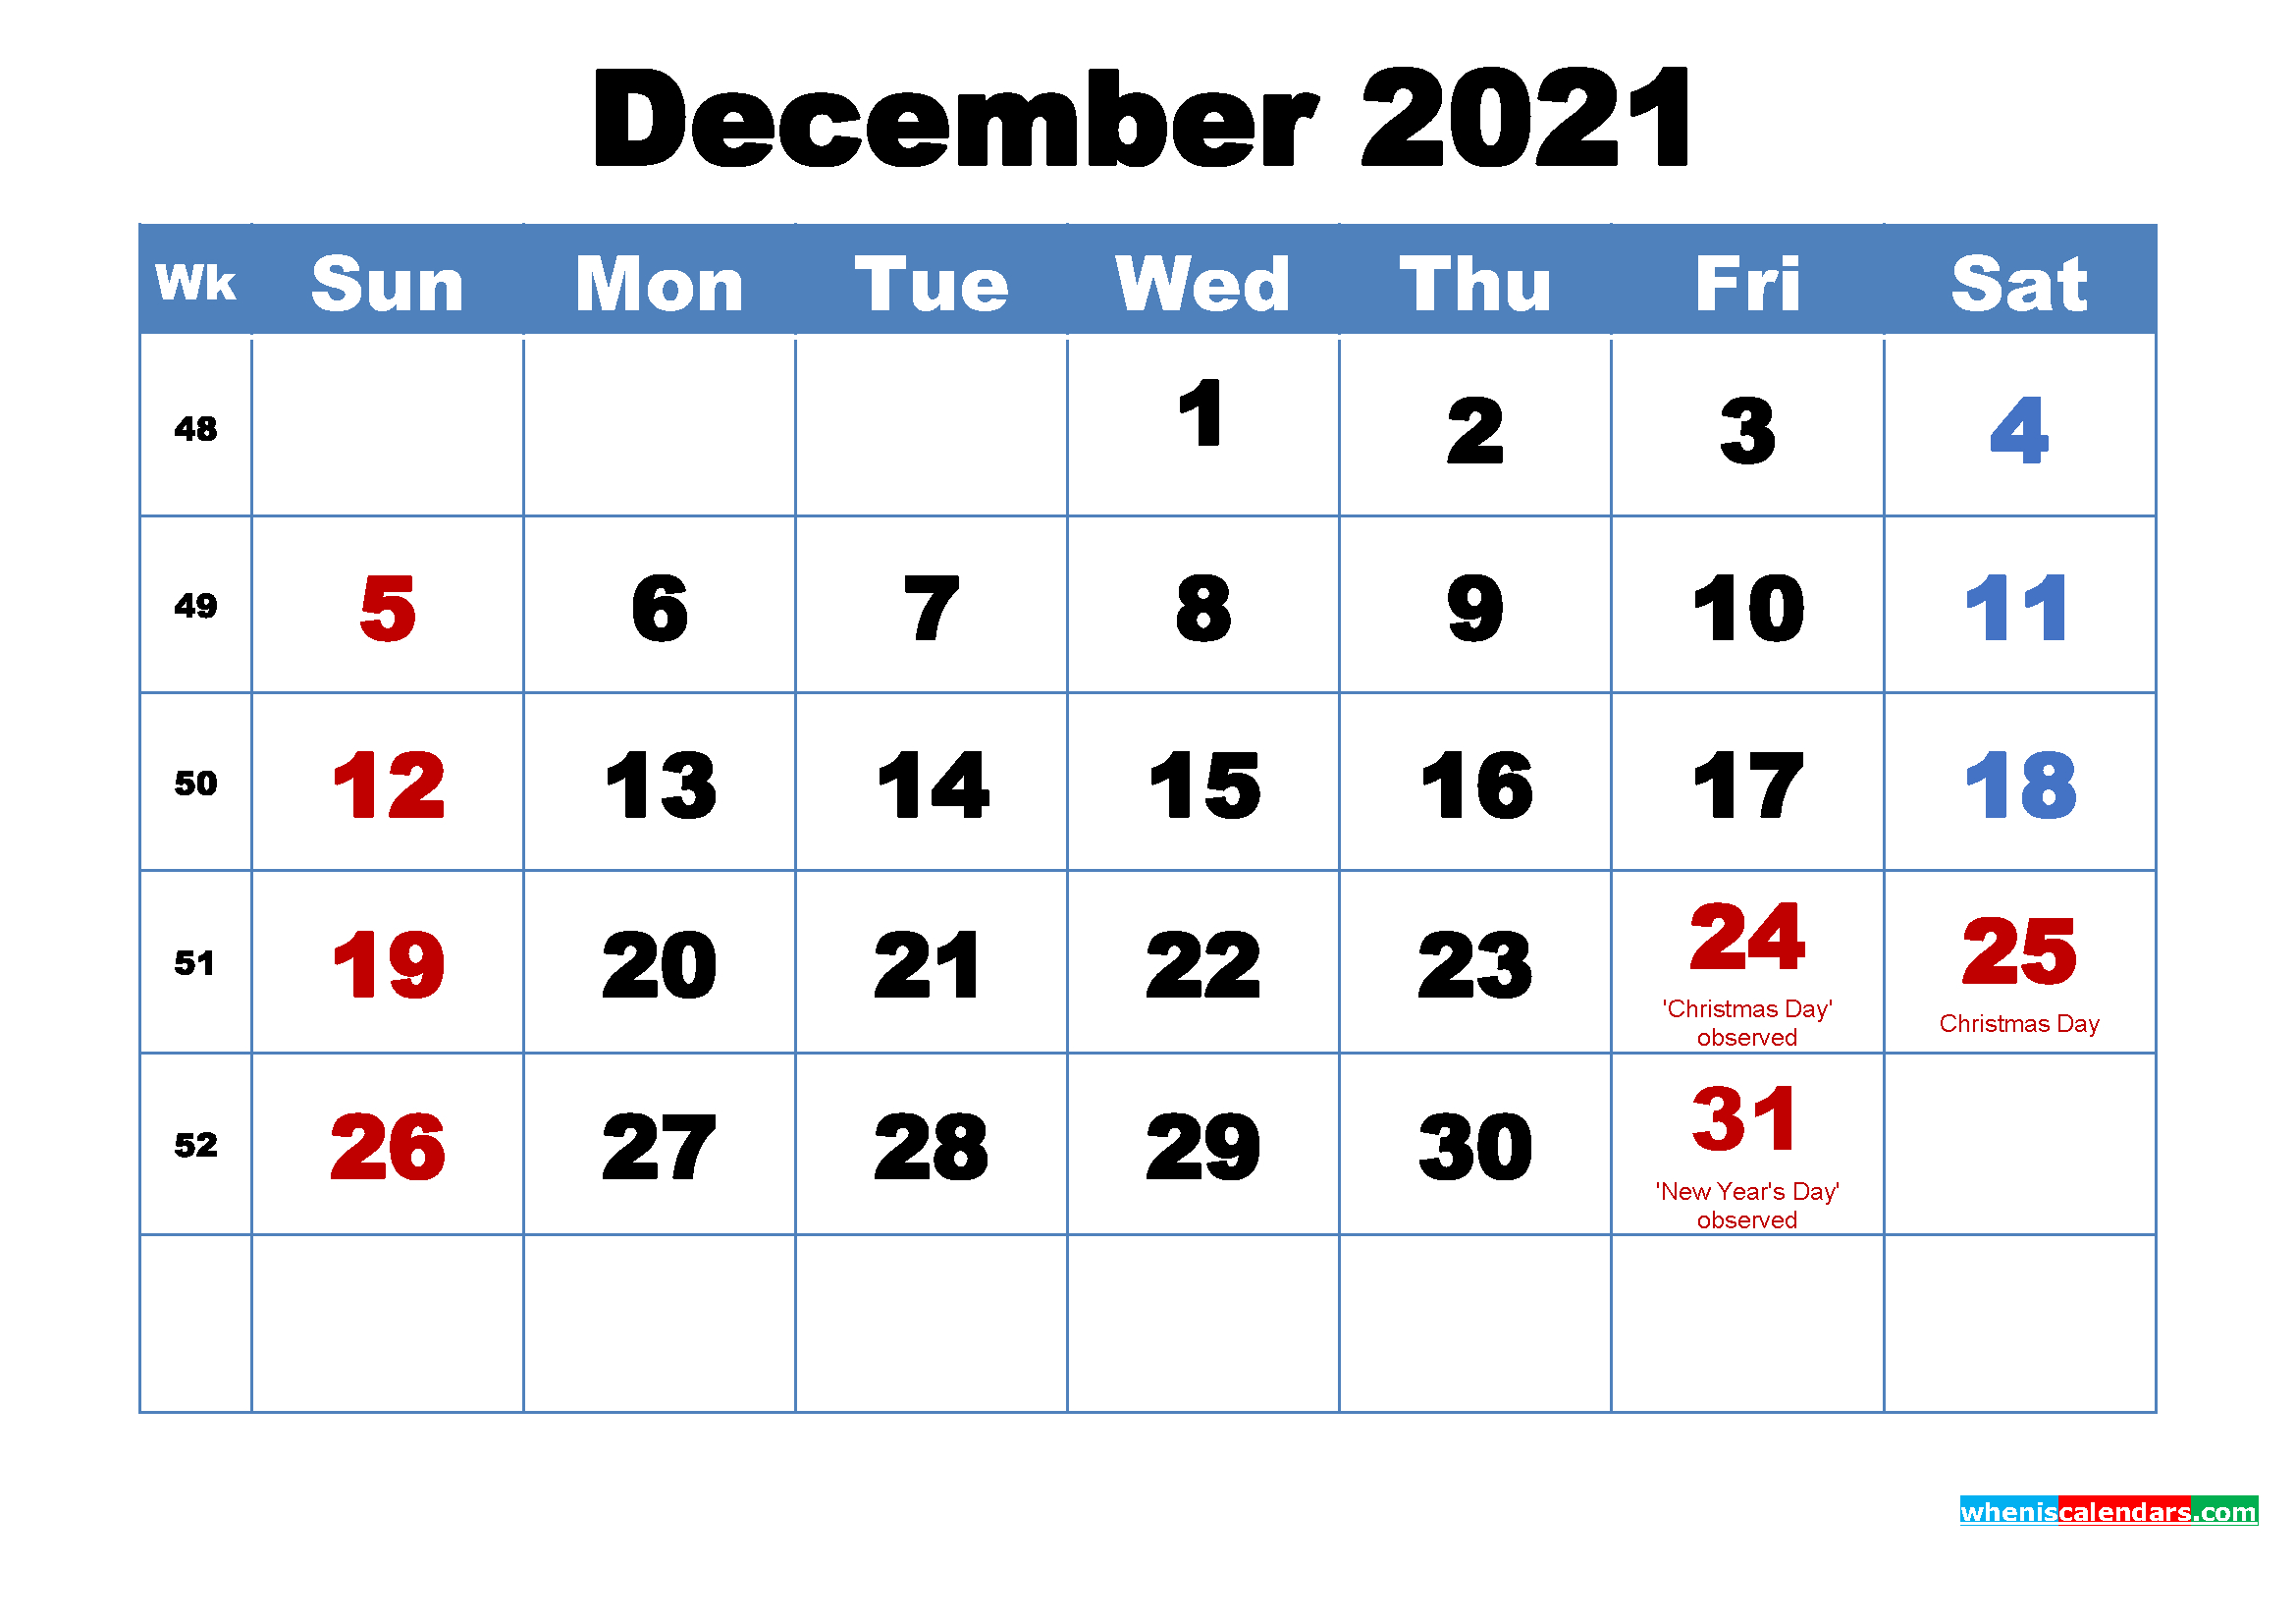 December 2021 Calendar Wallpaper Free Download November 2020 To December 2021 Calendar